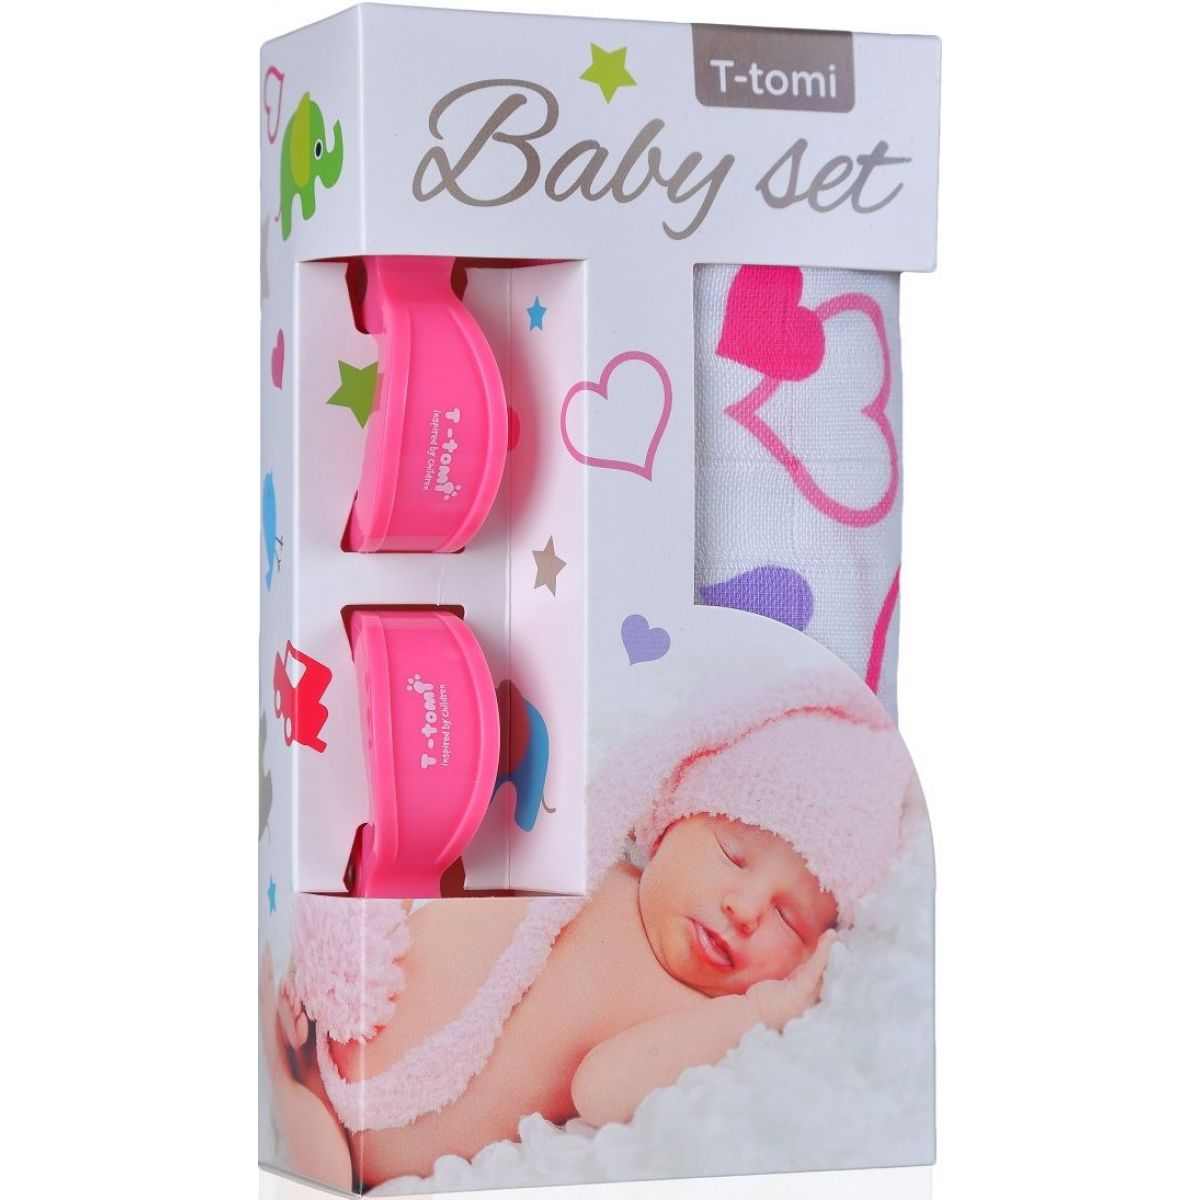 T-tomi Baby set: Bambusová BIO osuška srdíčka + kočárkový kolíček růžový